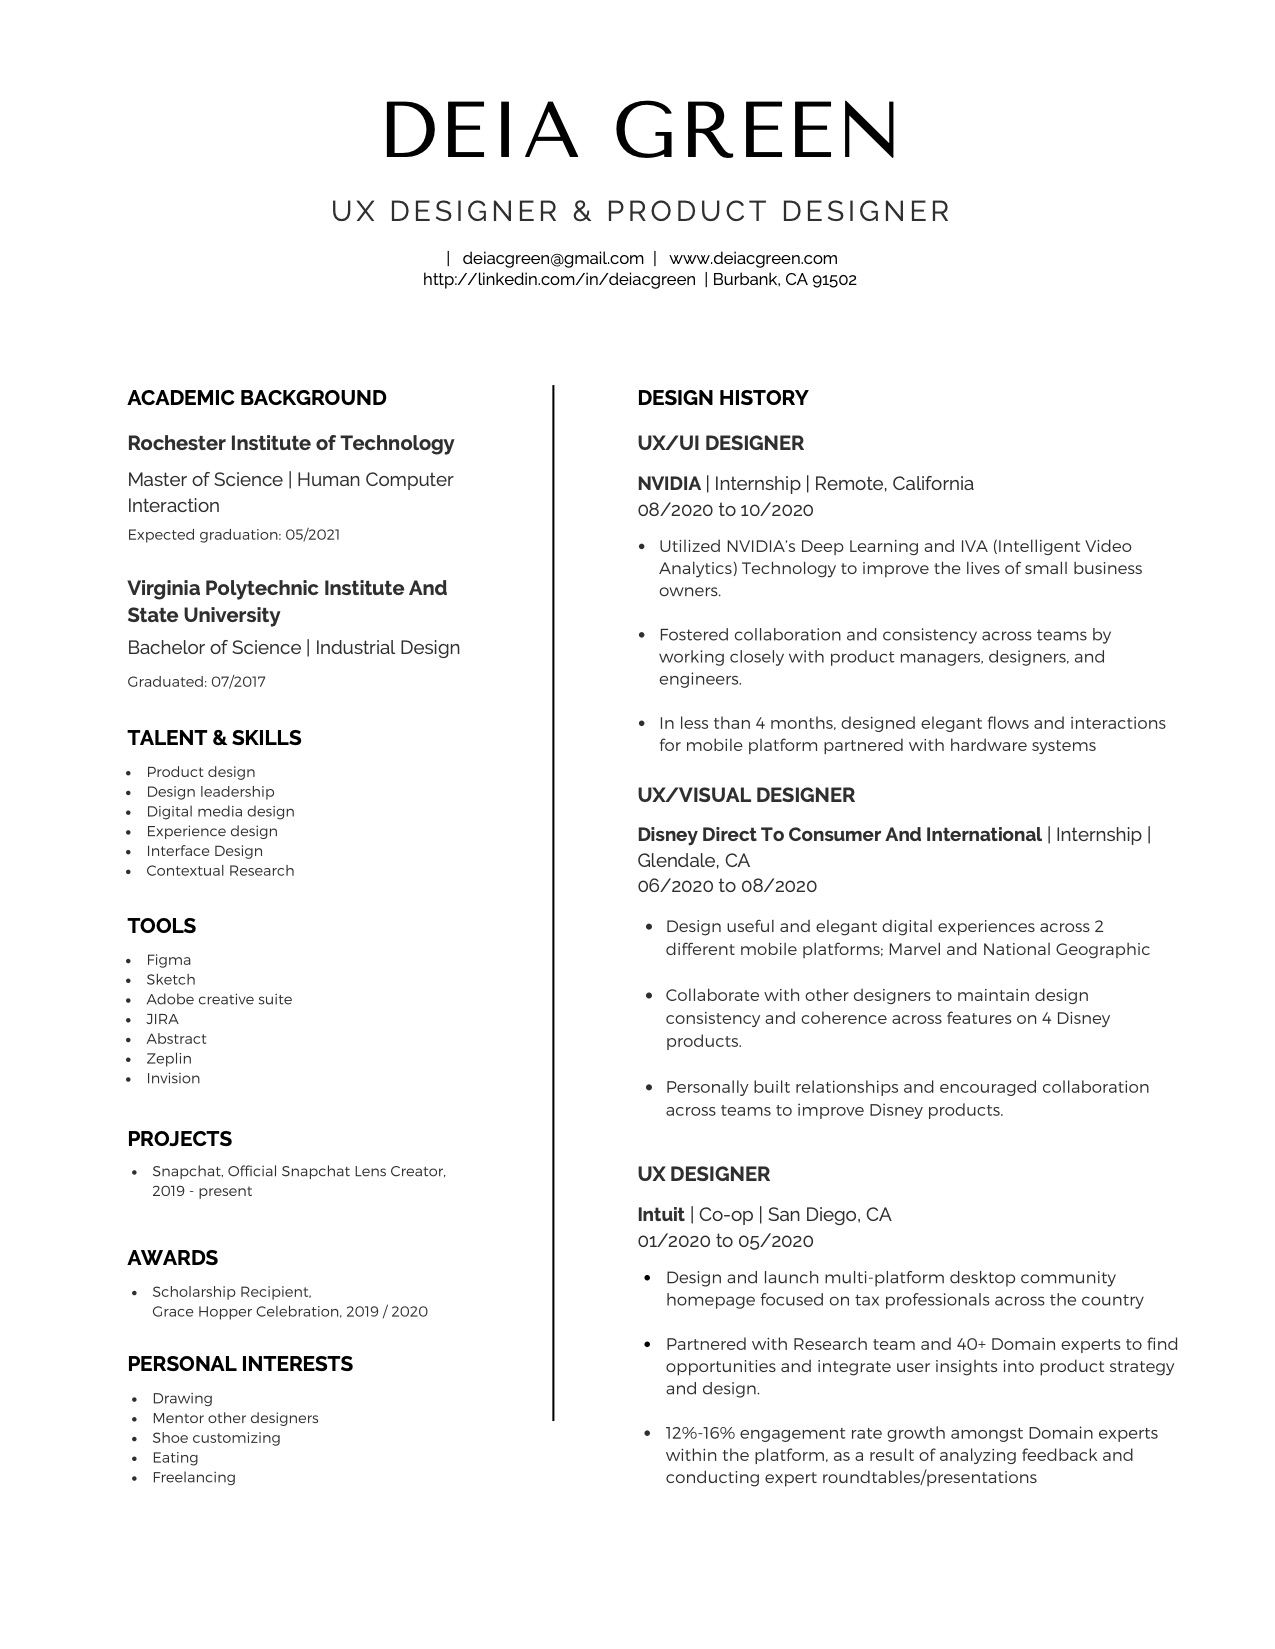 ux design jobs entry level